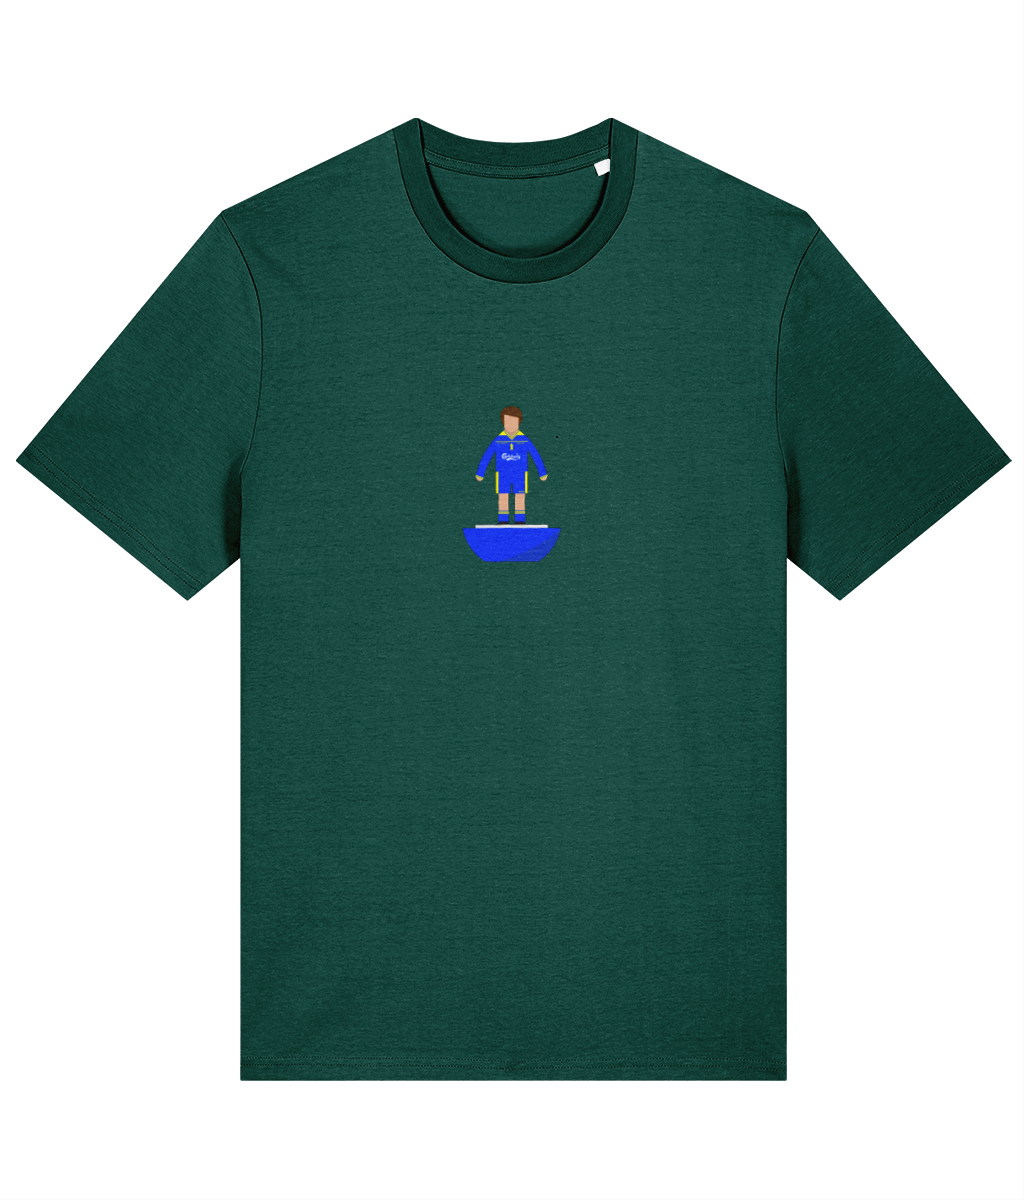 Football Kits 'Wimbledon 1988' Unisex T-Shirt